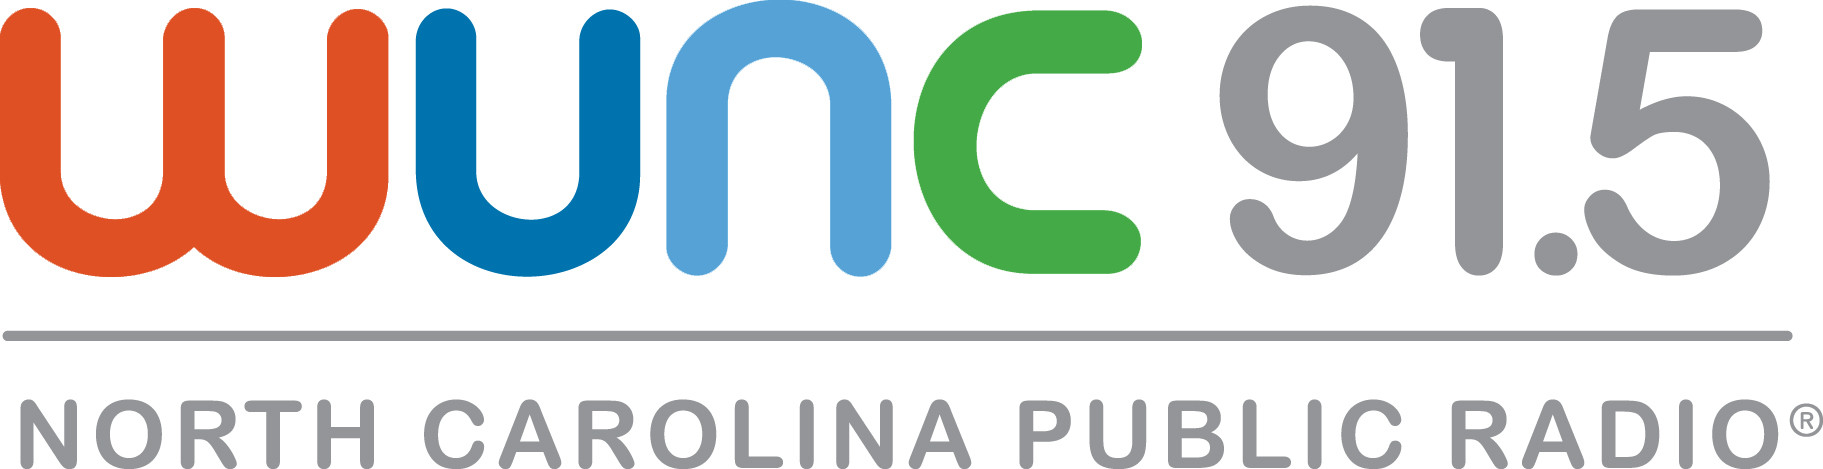 WUNC 91.5 North Carolina Public Radio logo